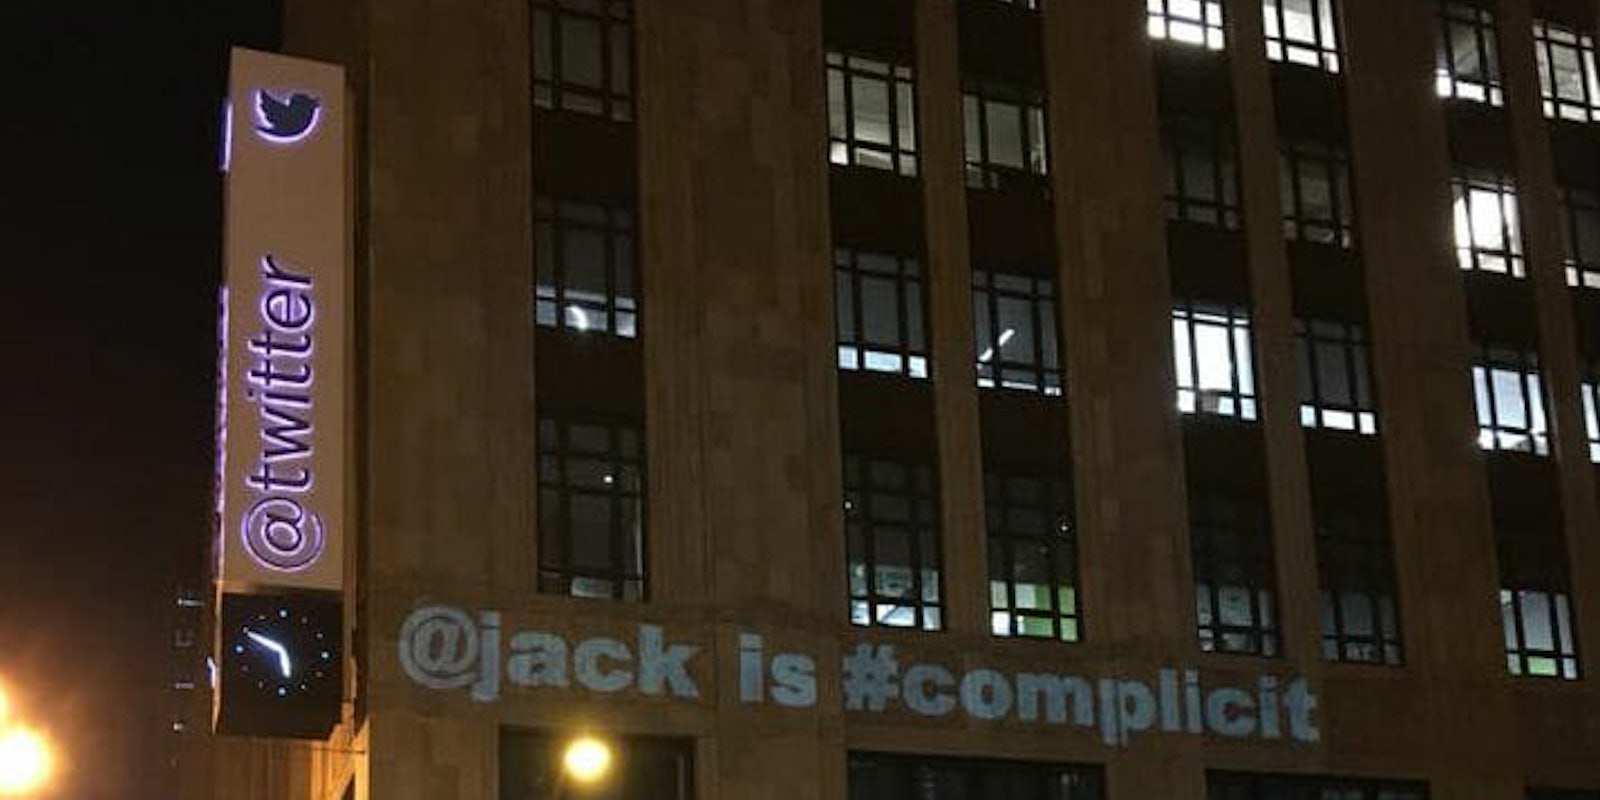 jack is complicit twitter